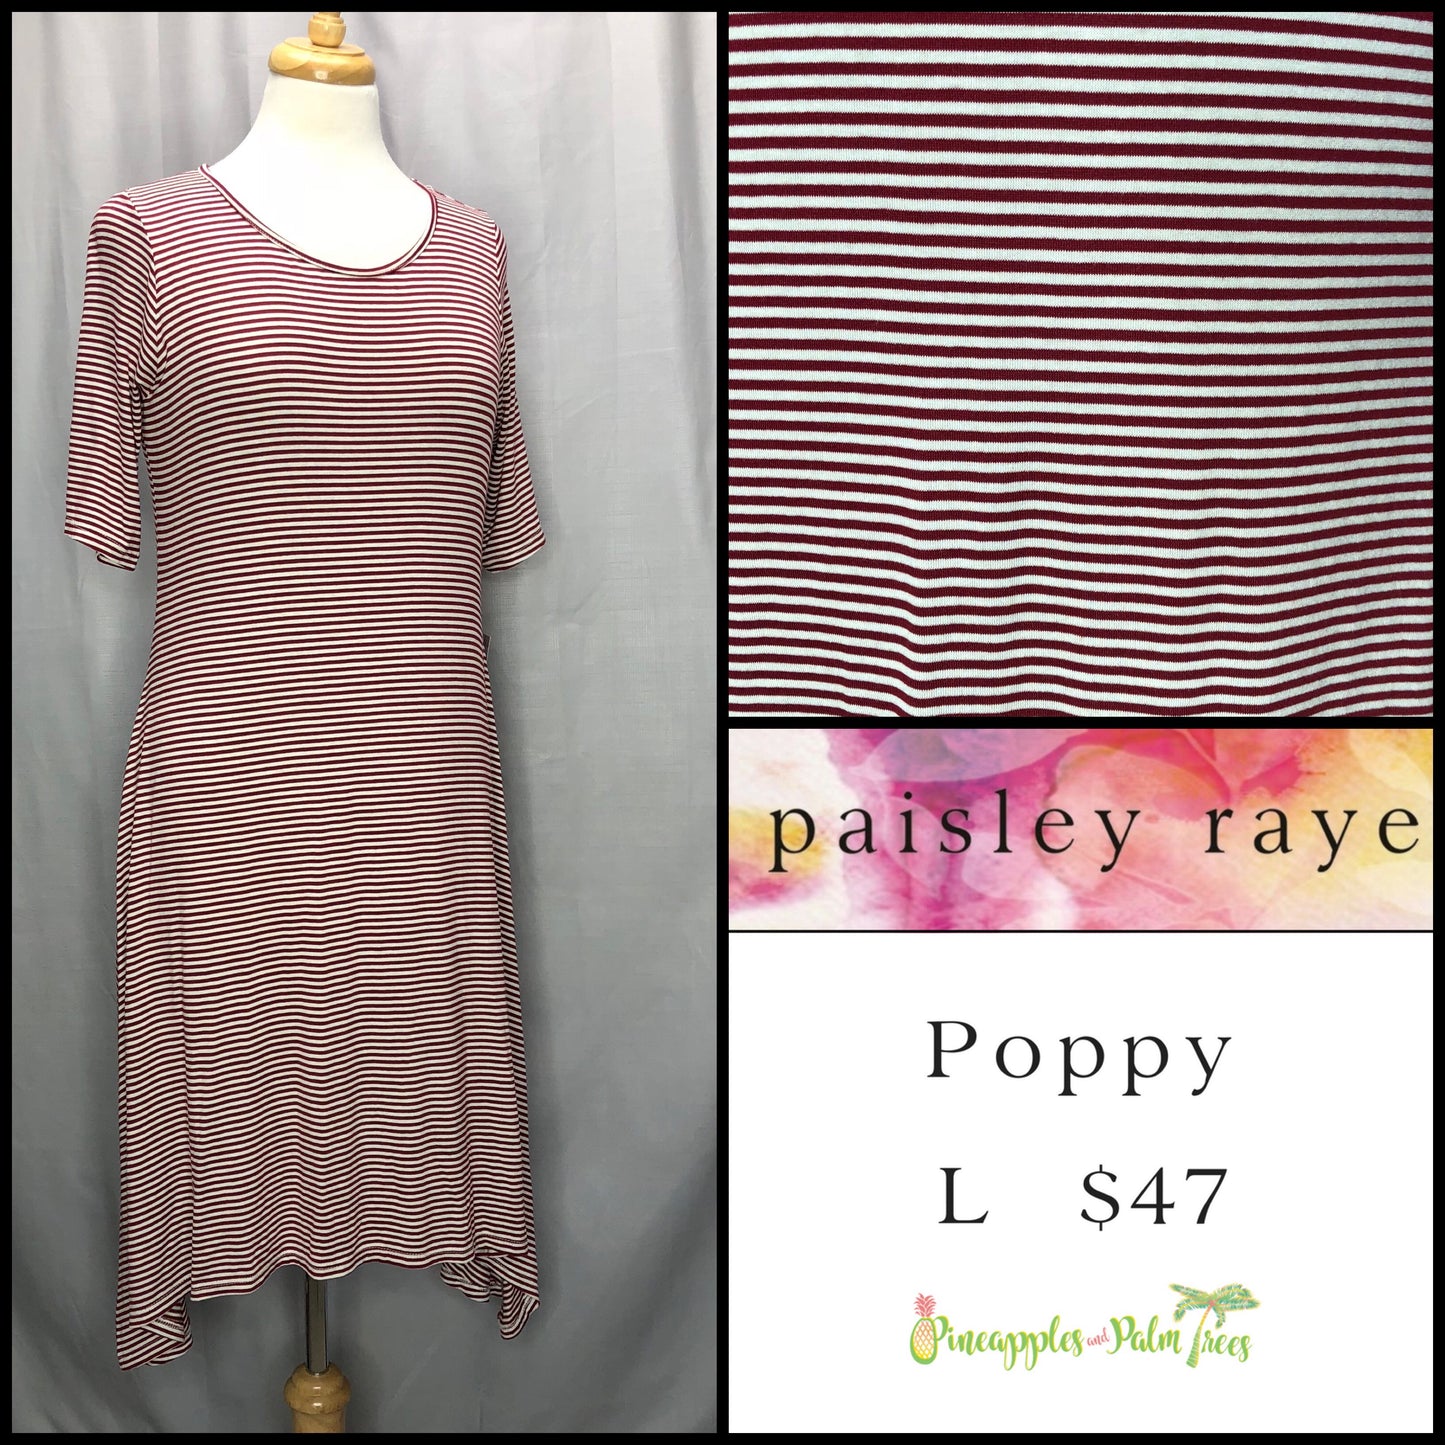 Dress: Poppy L - burgundy and white stripes